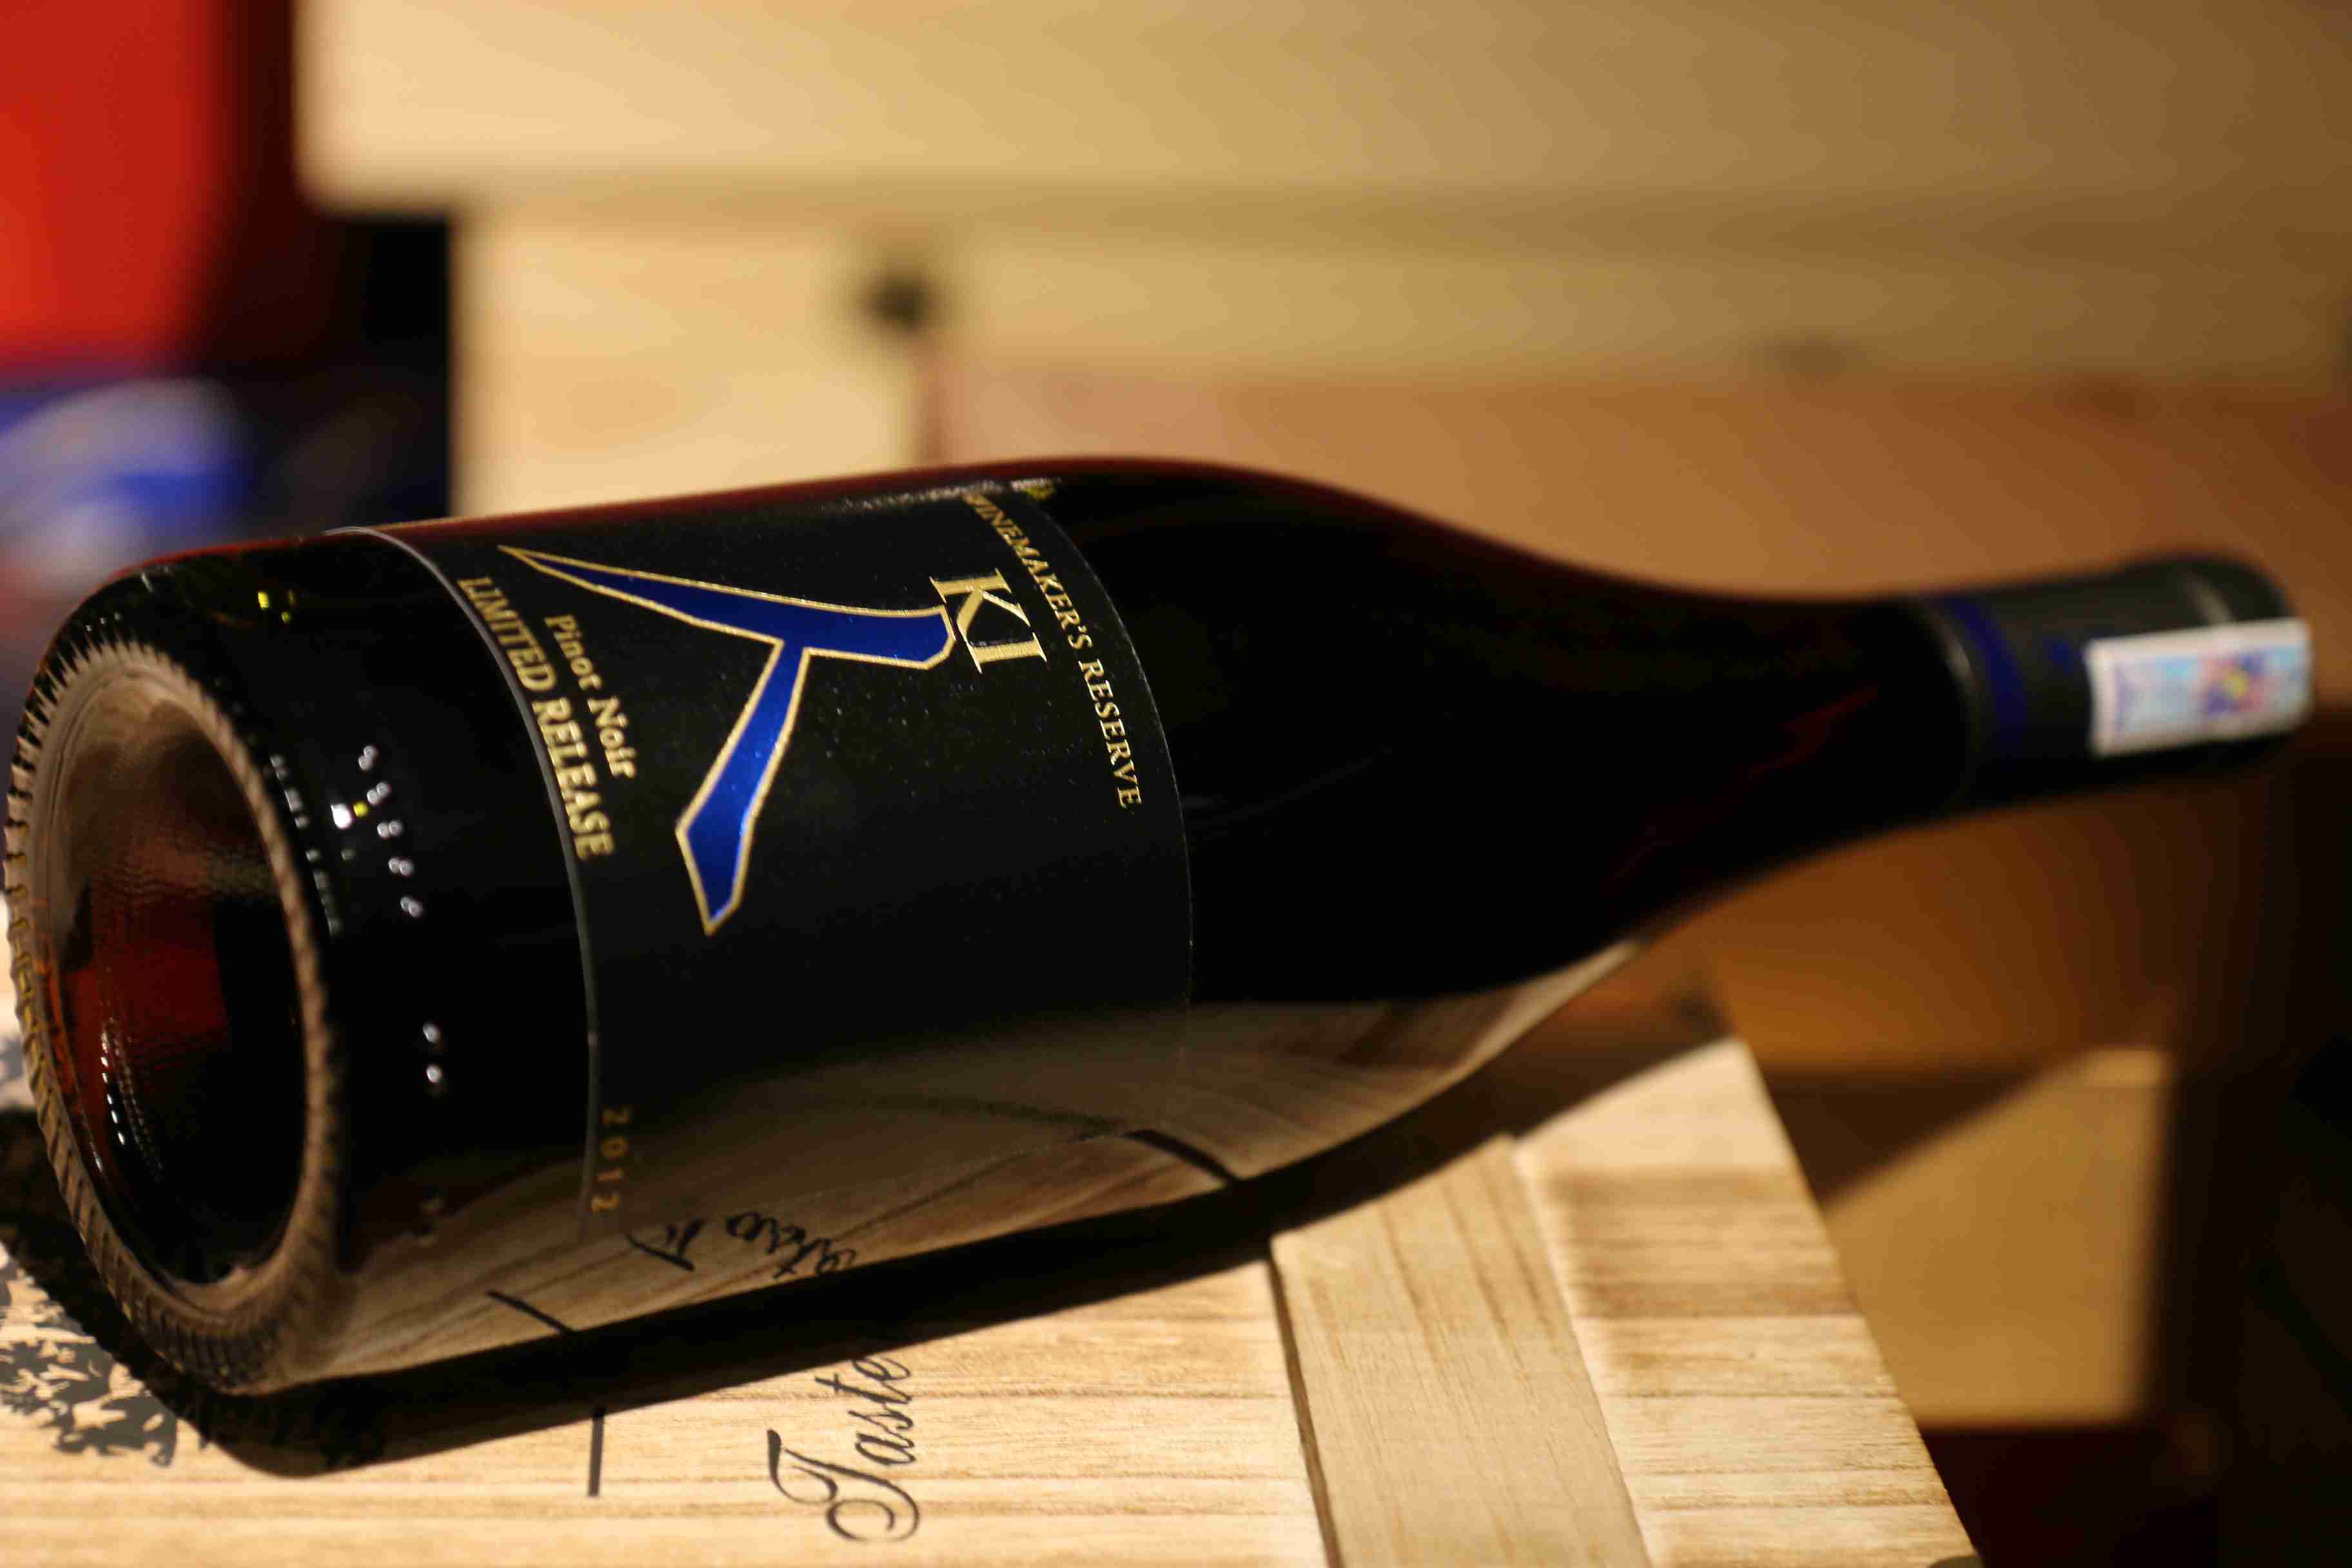 Rượu vang Chile Pinot Noir Ki Winemaker's Reserve